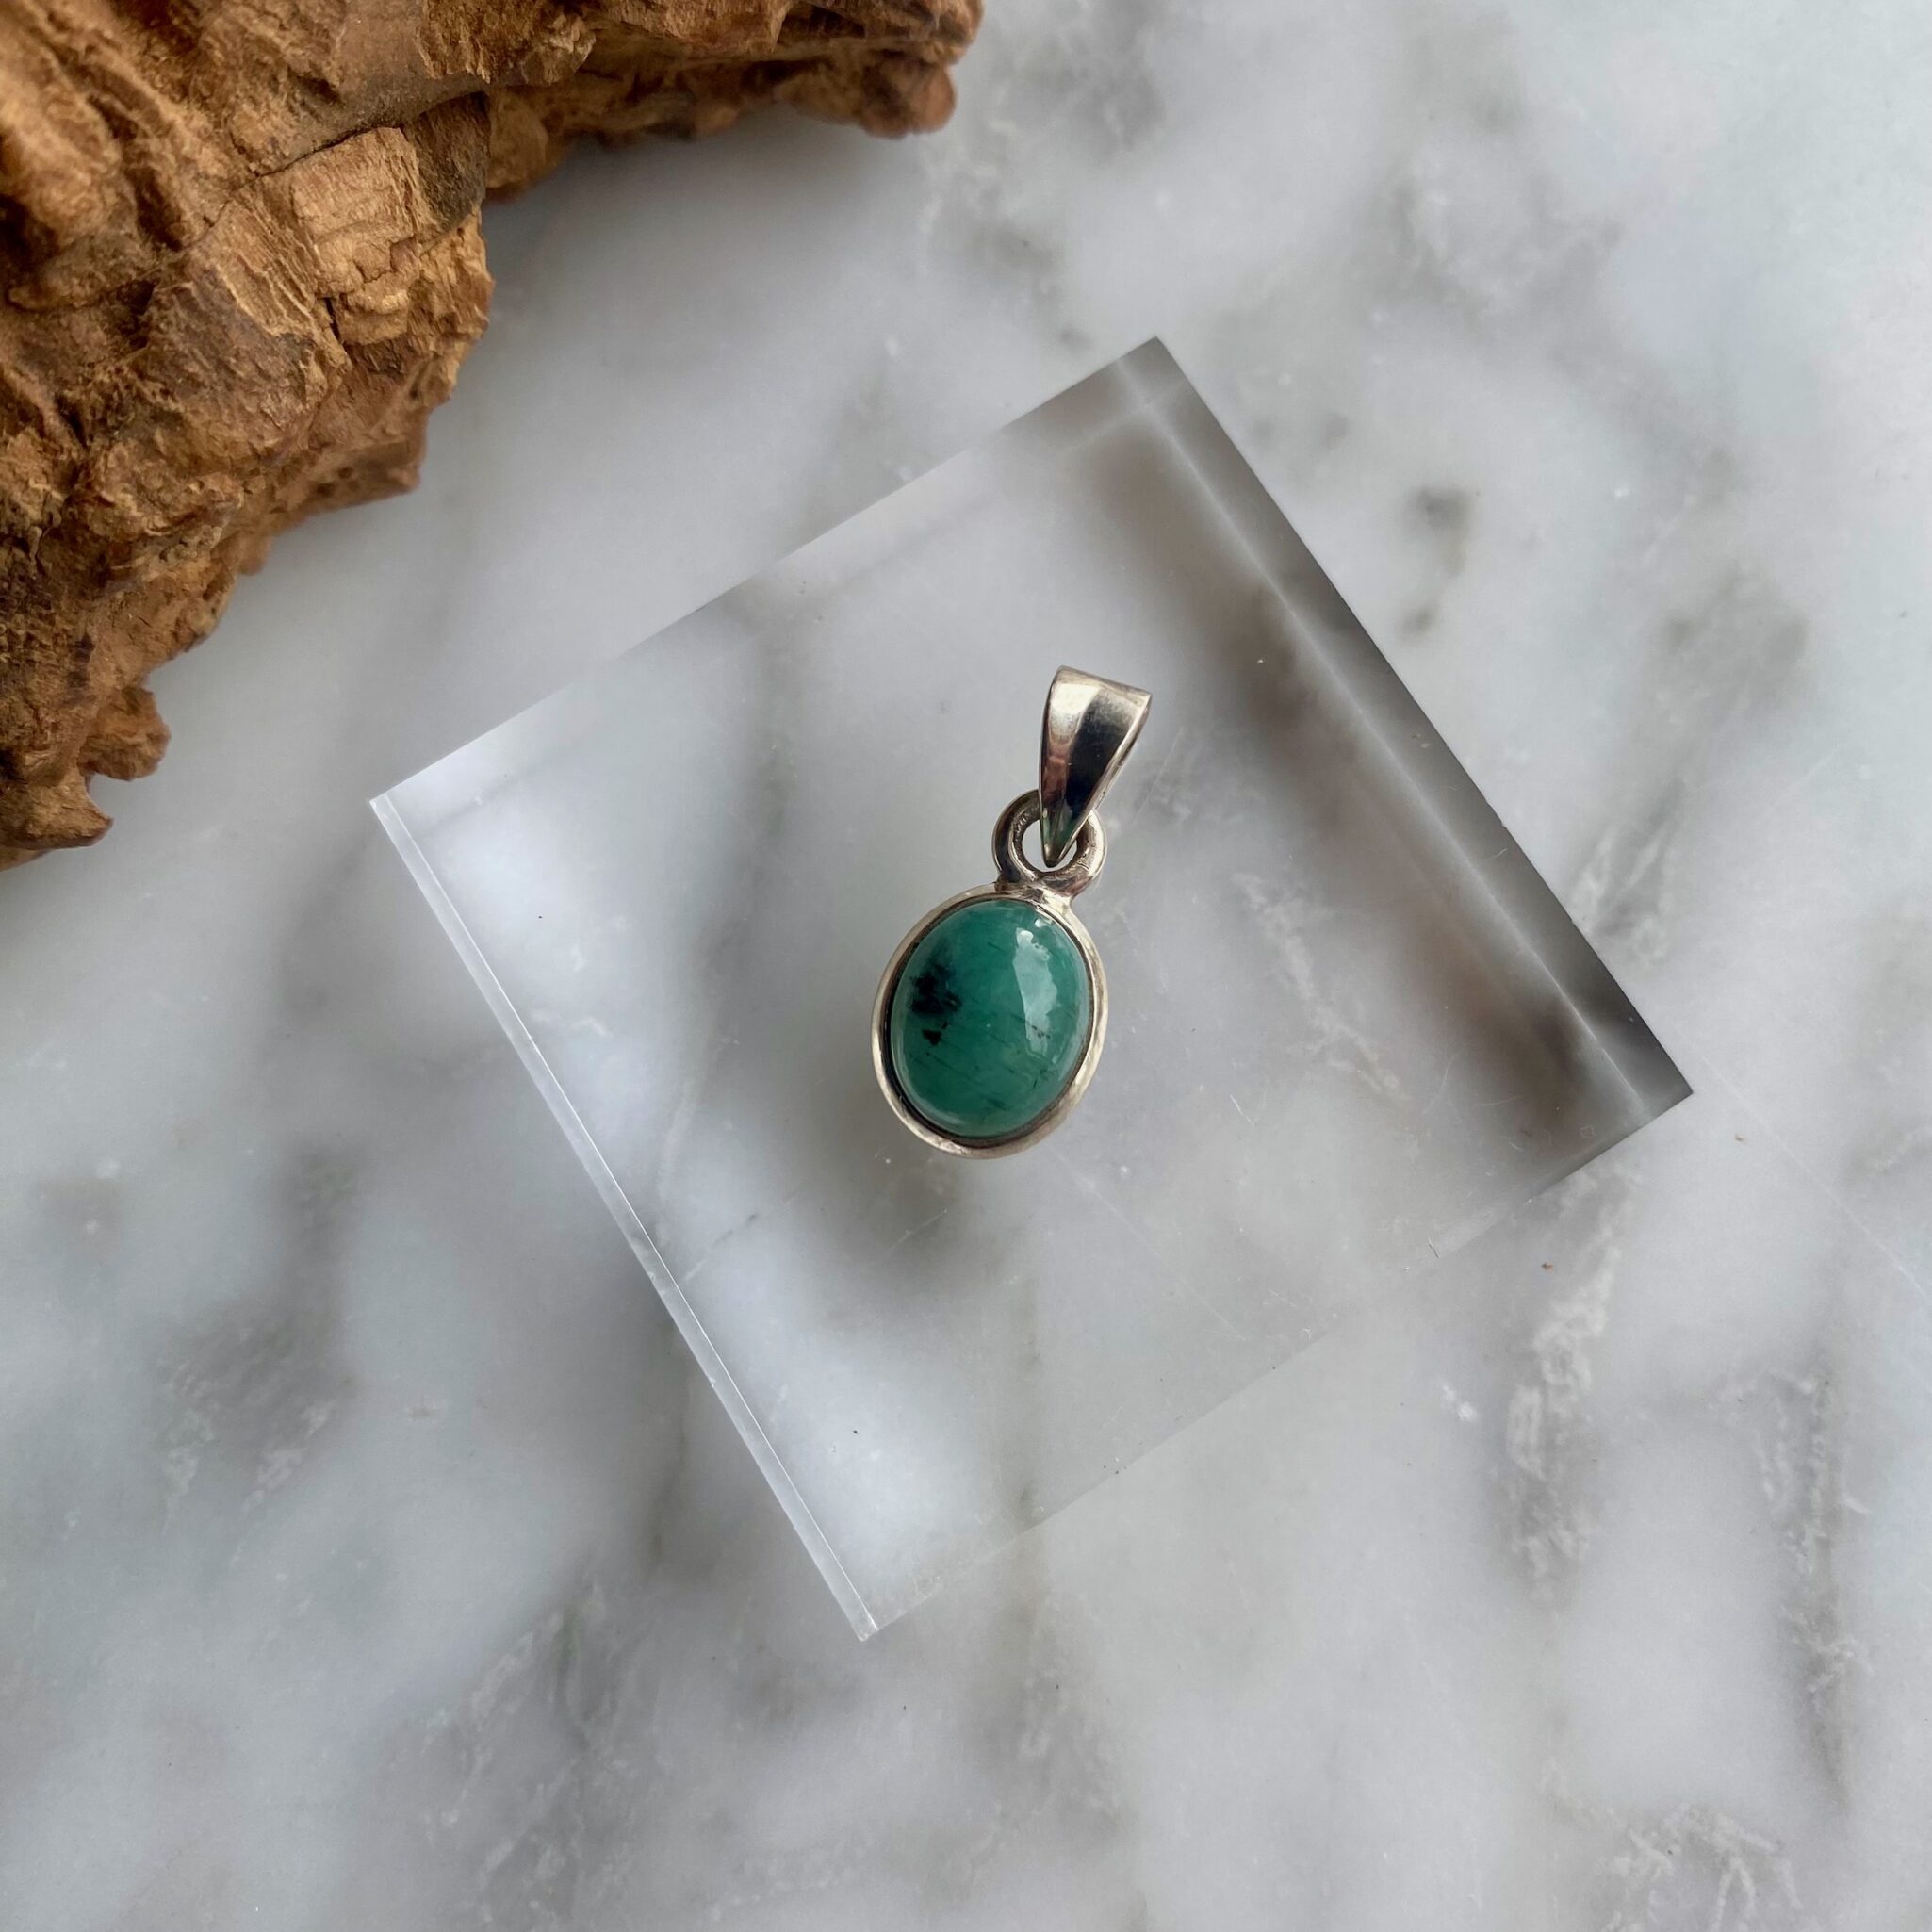 dainty mini emerald sterling silver pendant - délicat mini pendentif d'emeraude en argent sterling a